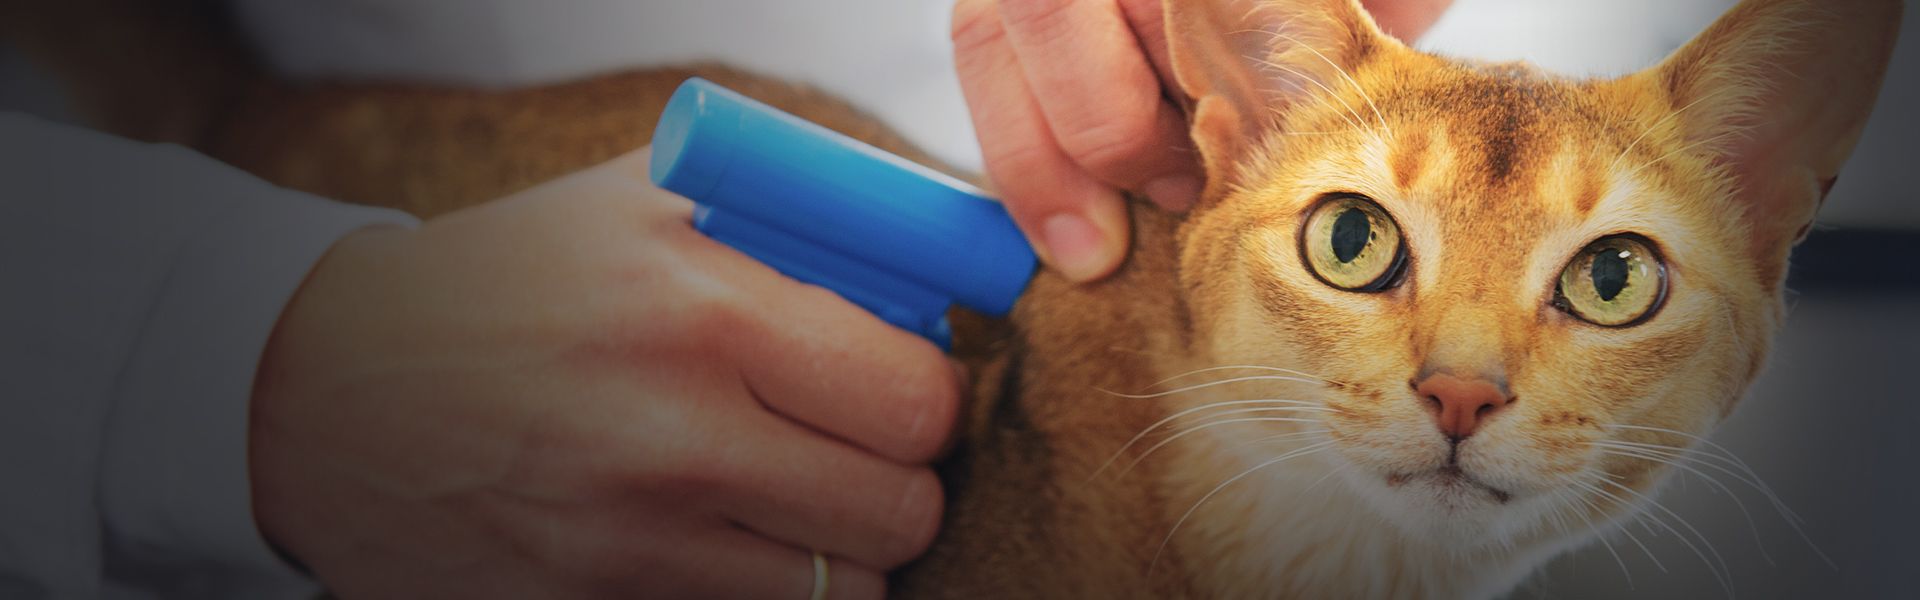 veterinarian microchipping a cat